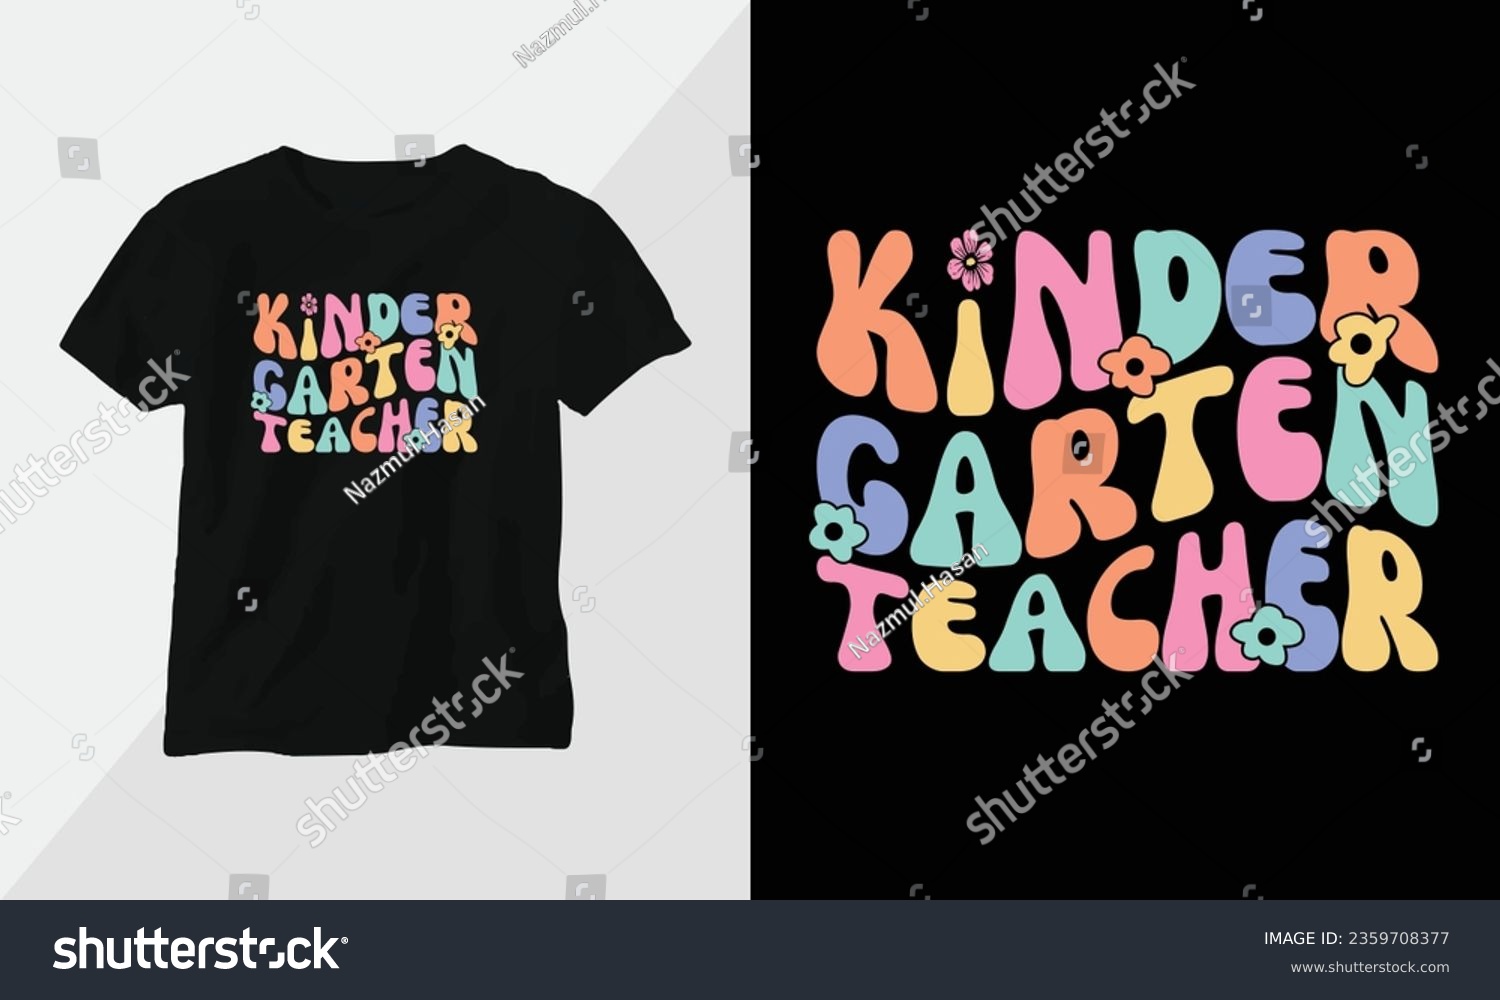 SVG of kindergarten teacher - Retro Groovy Inspirational T-shirt Design with retro style svg